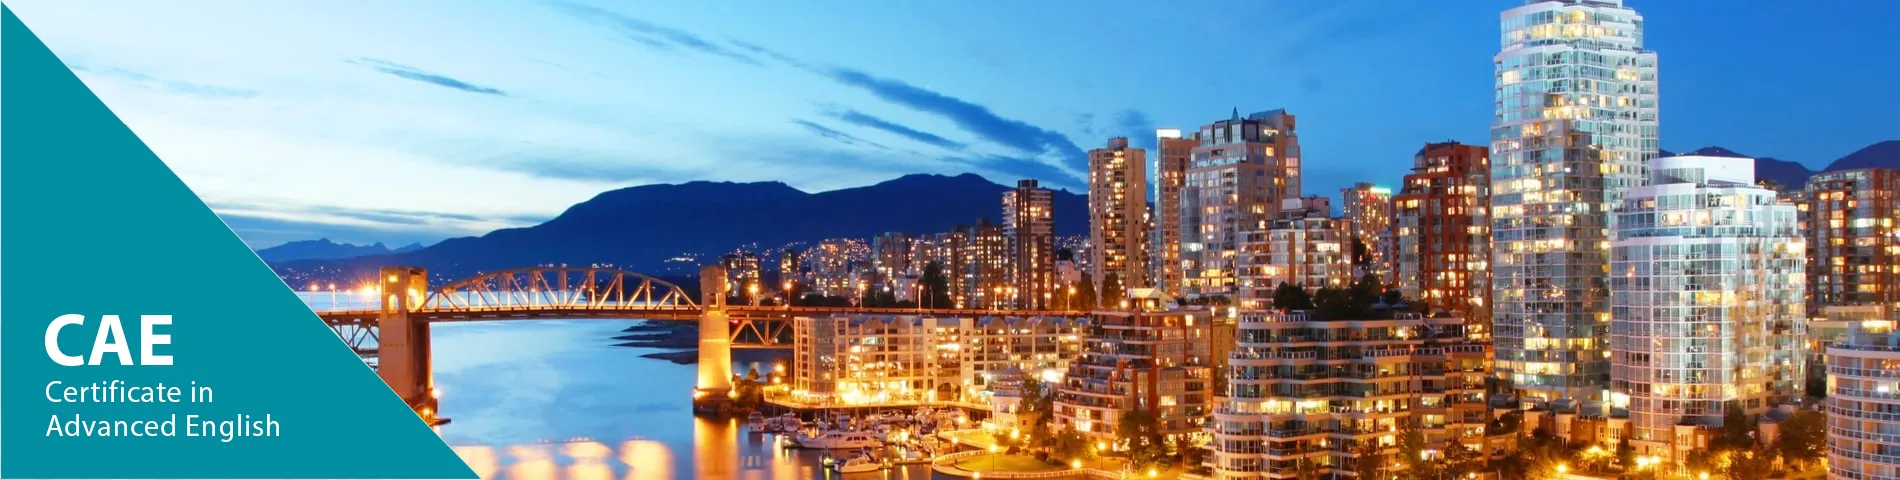 Vancouver - Certifikát Cambridge Advanced